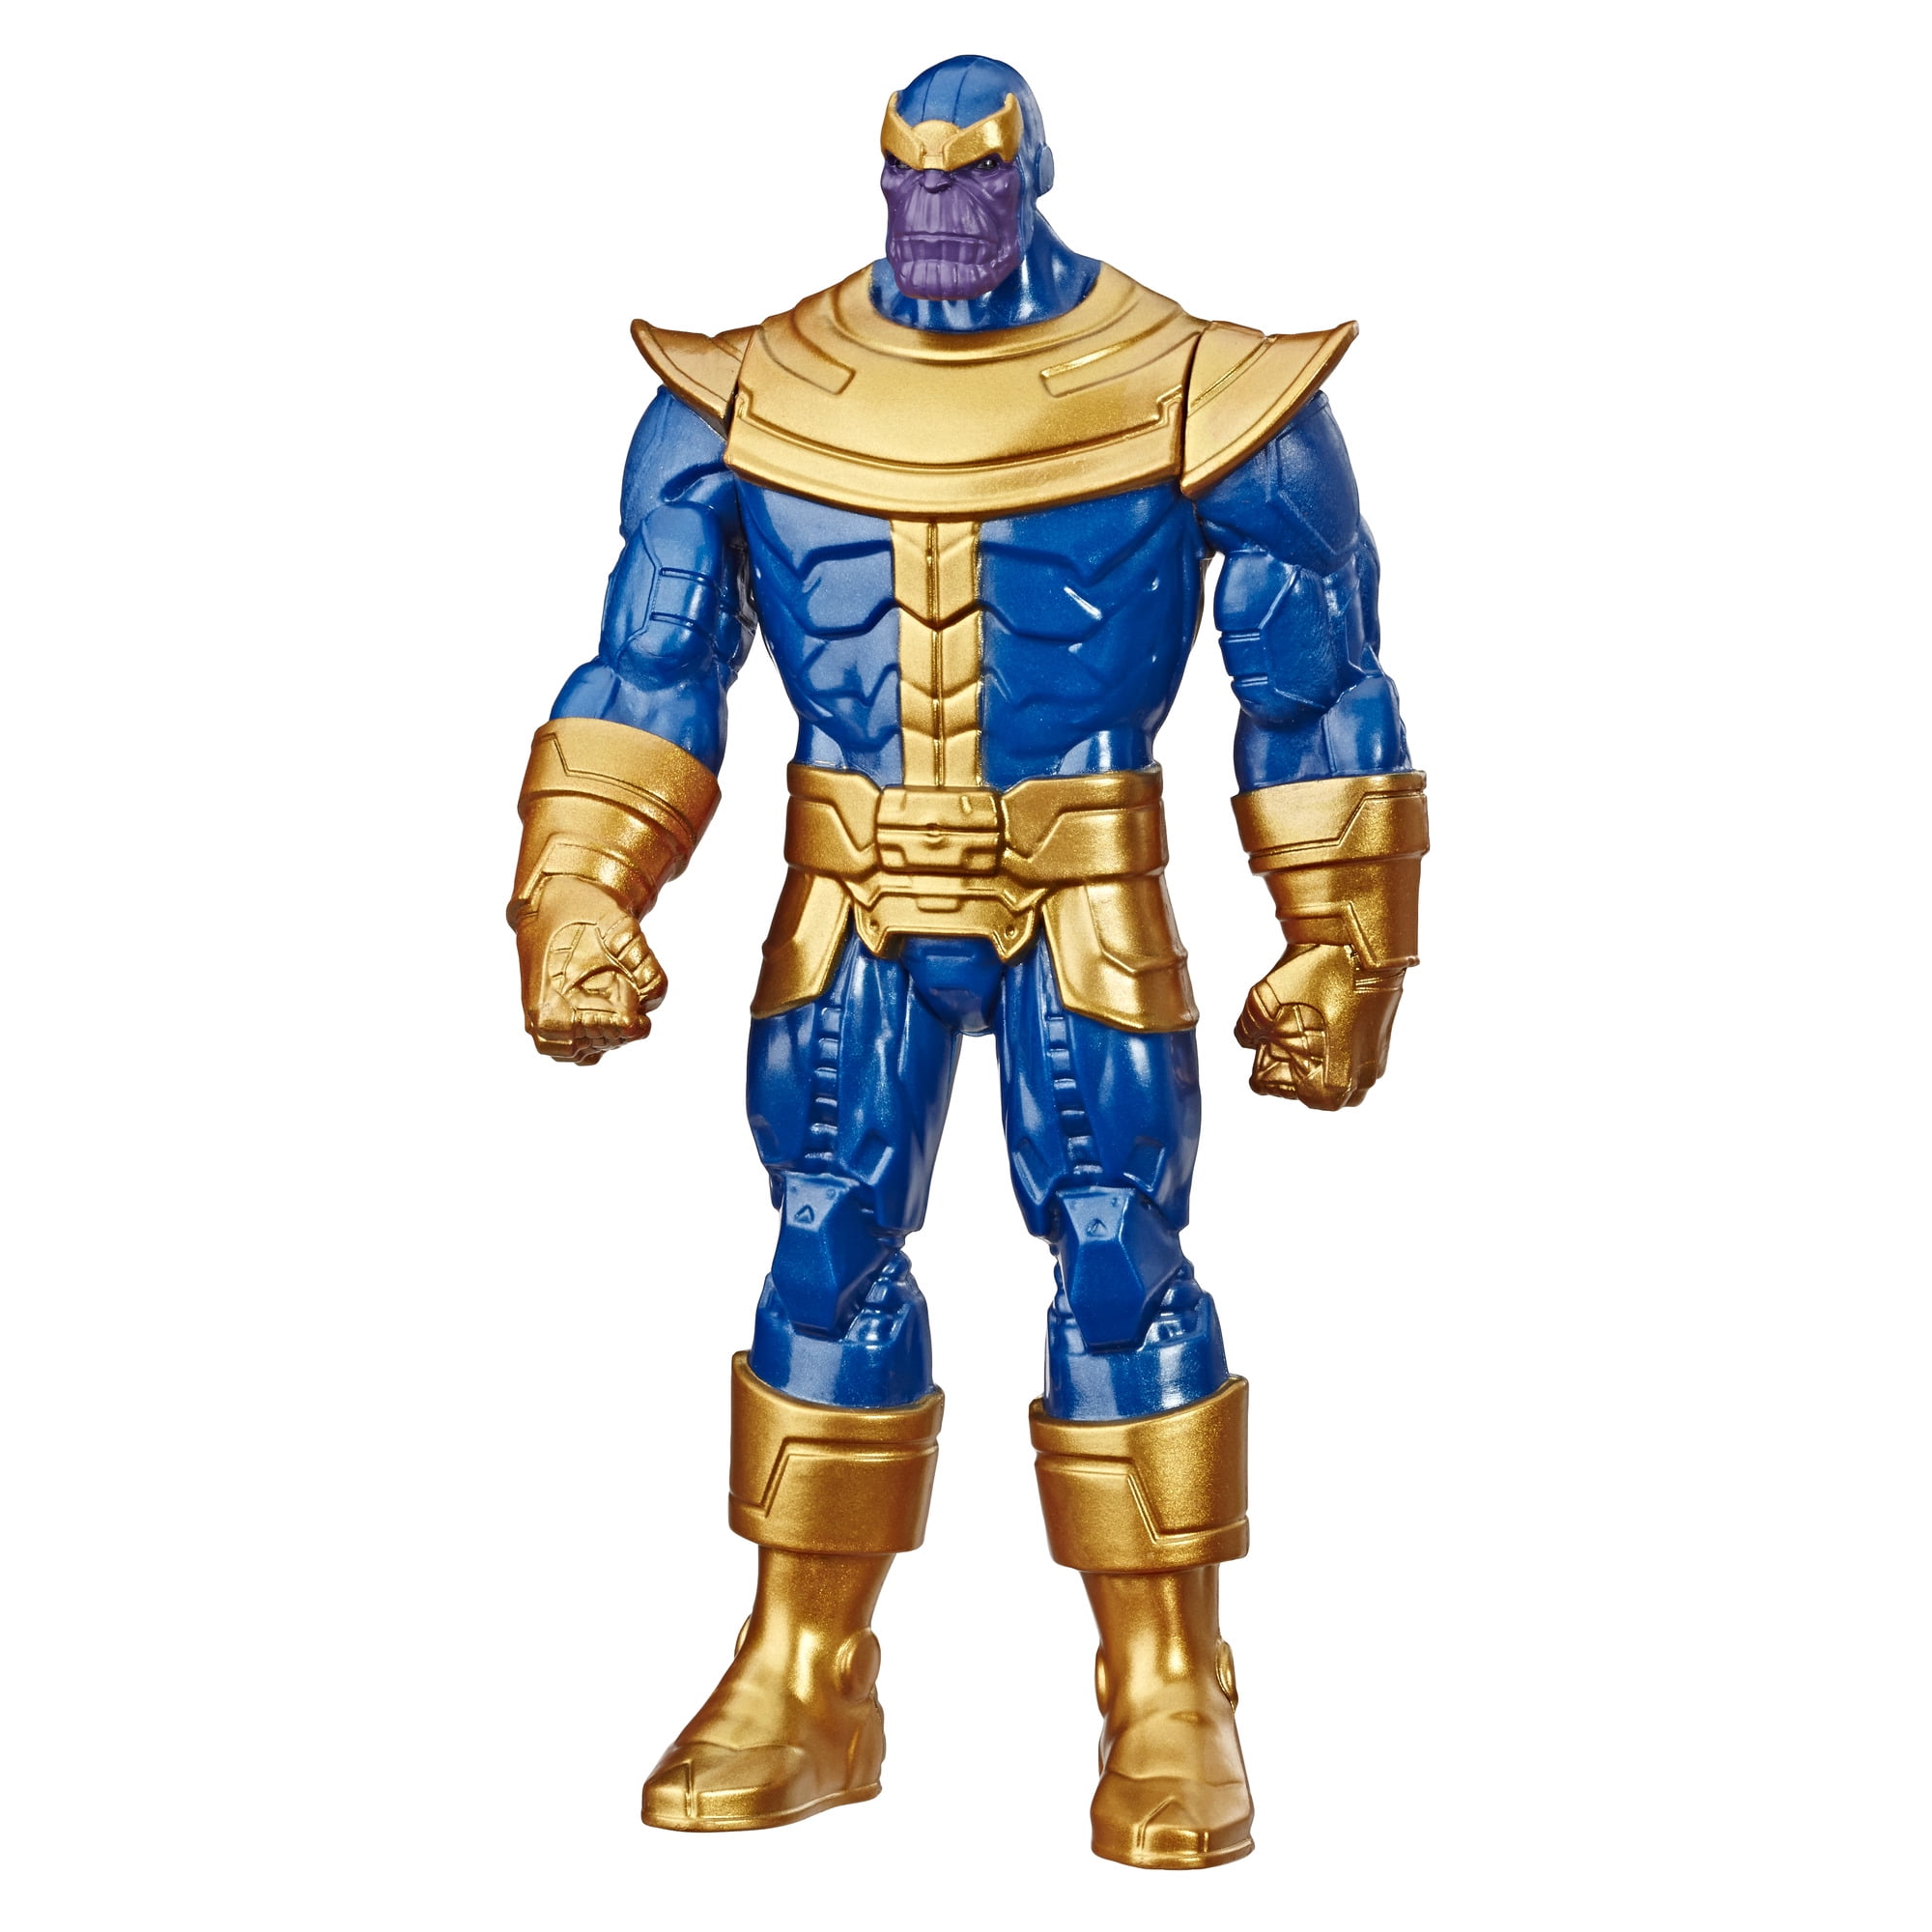 Hasbro Marvel Avengers Endgame Hulk Deluxe Figure from Marvel Cinematic Universe Mcu Movies